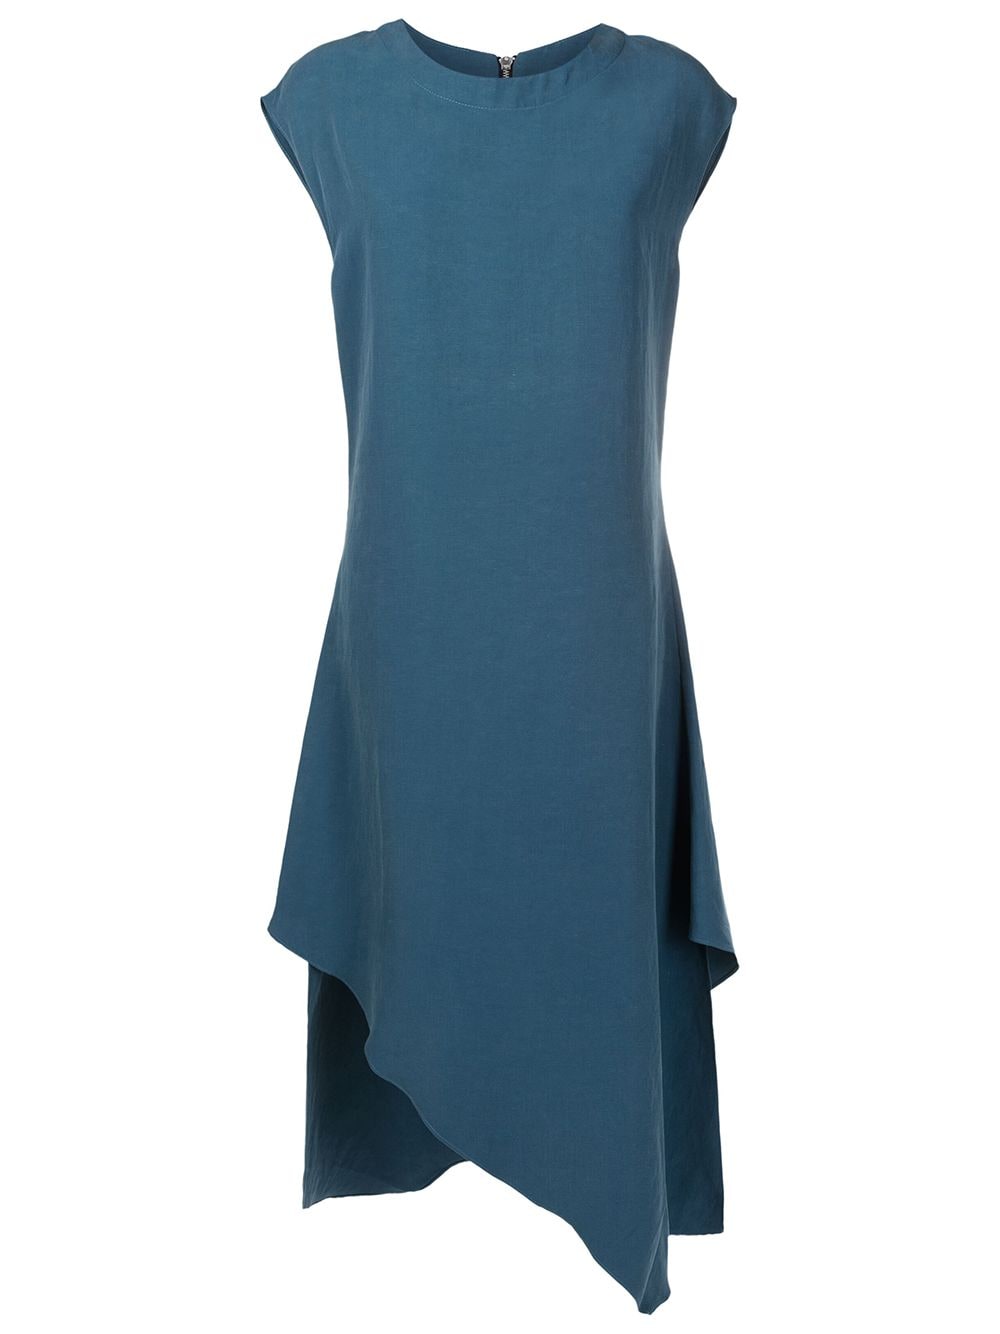 Uma | Raquel Davidowicz Asymmetrisches Kleid - Blau von Uma | Raquel Davidowicz